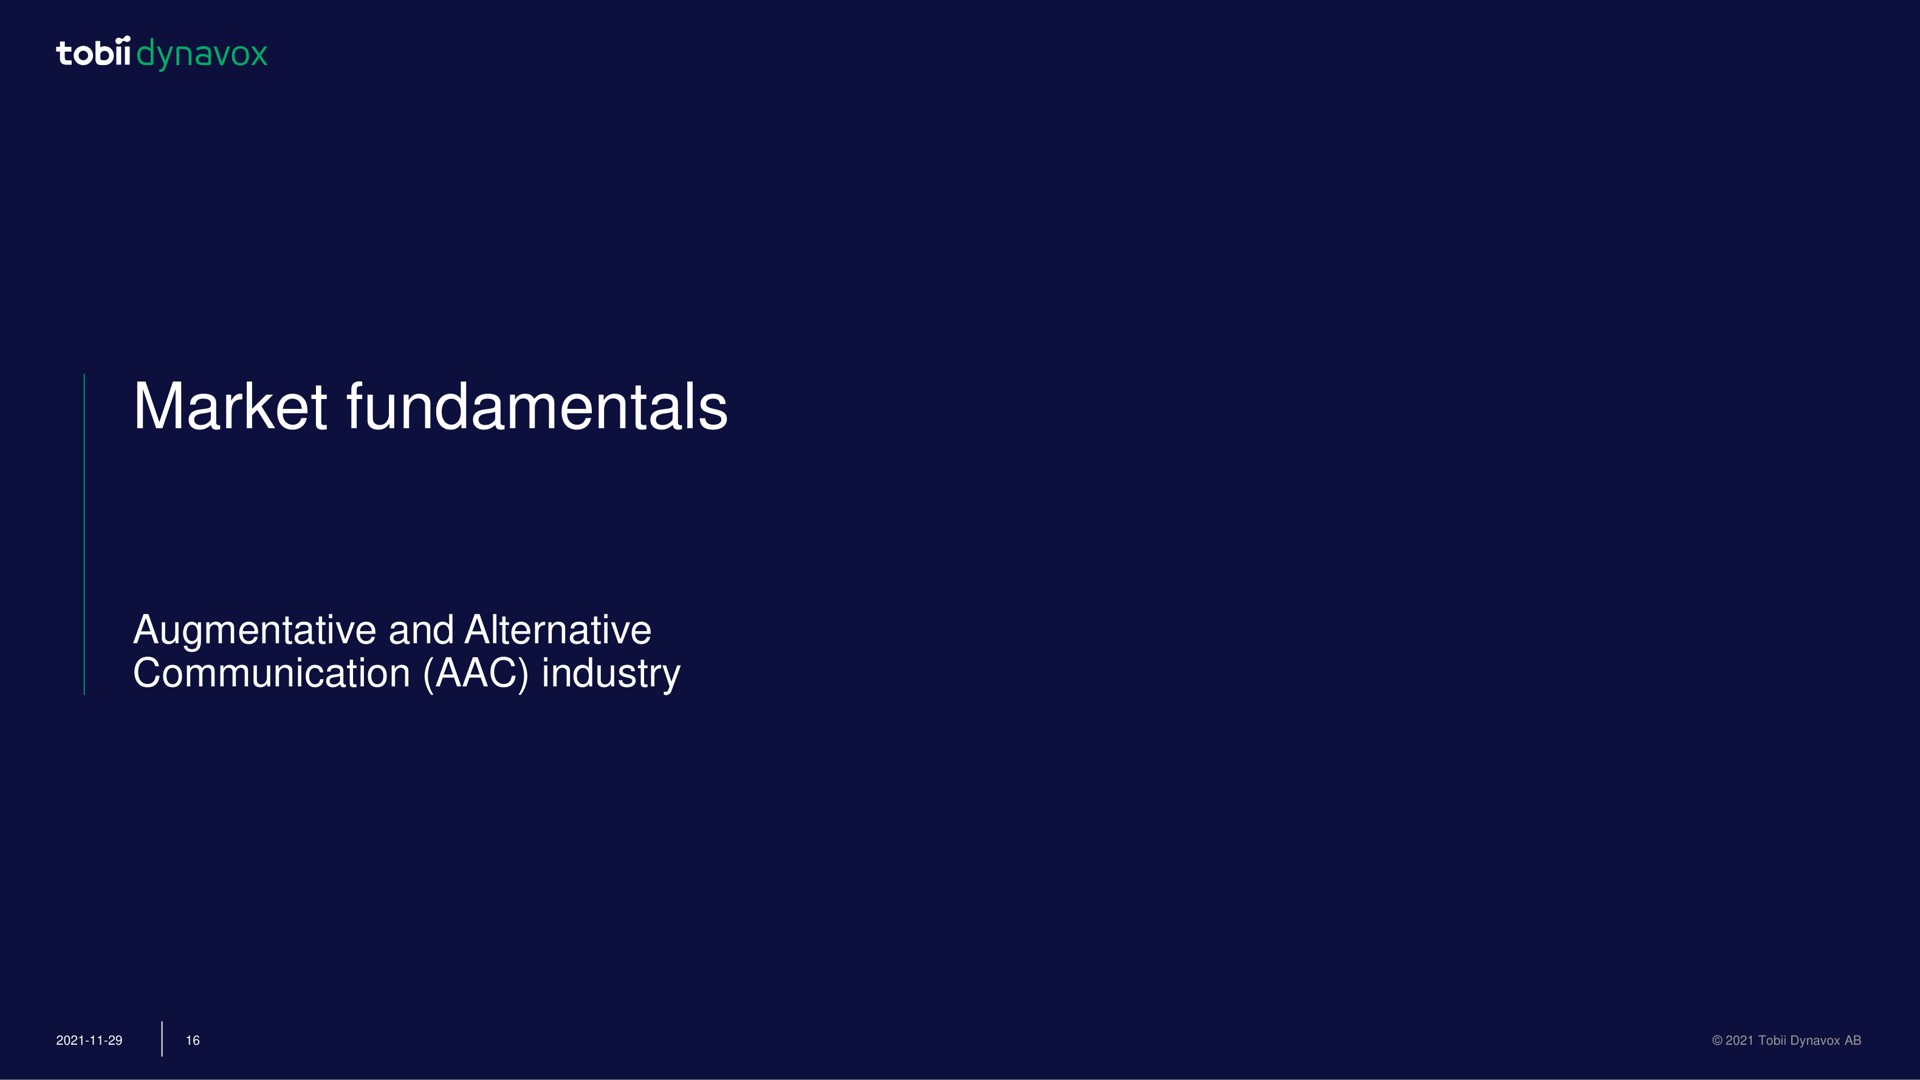 market fundamentals augmentative and alternative communication industry | Tobii Dynavox